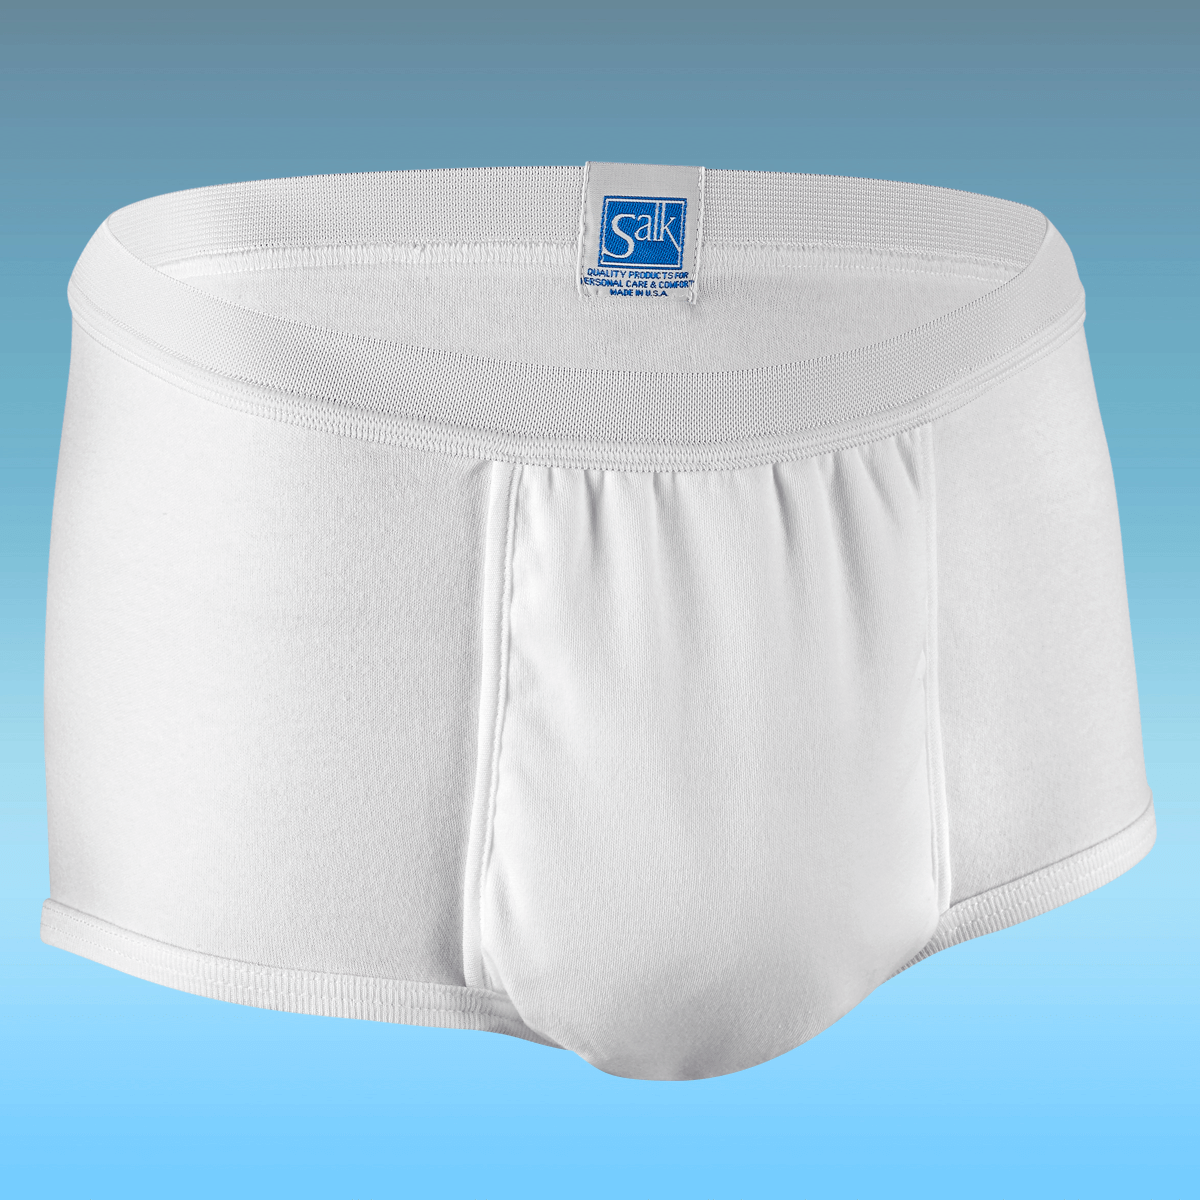 Materials in Incontinence Underwear